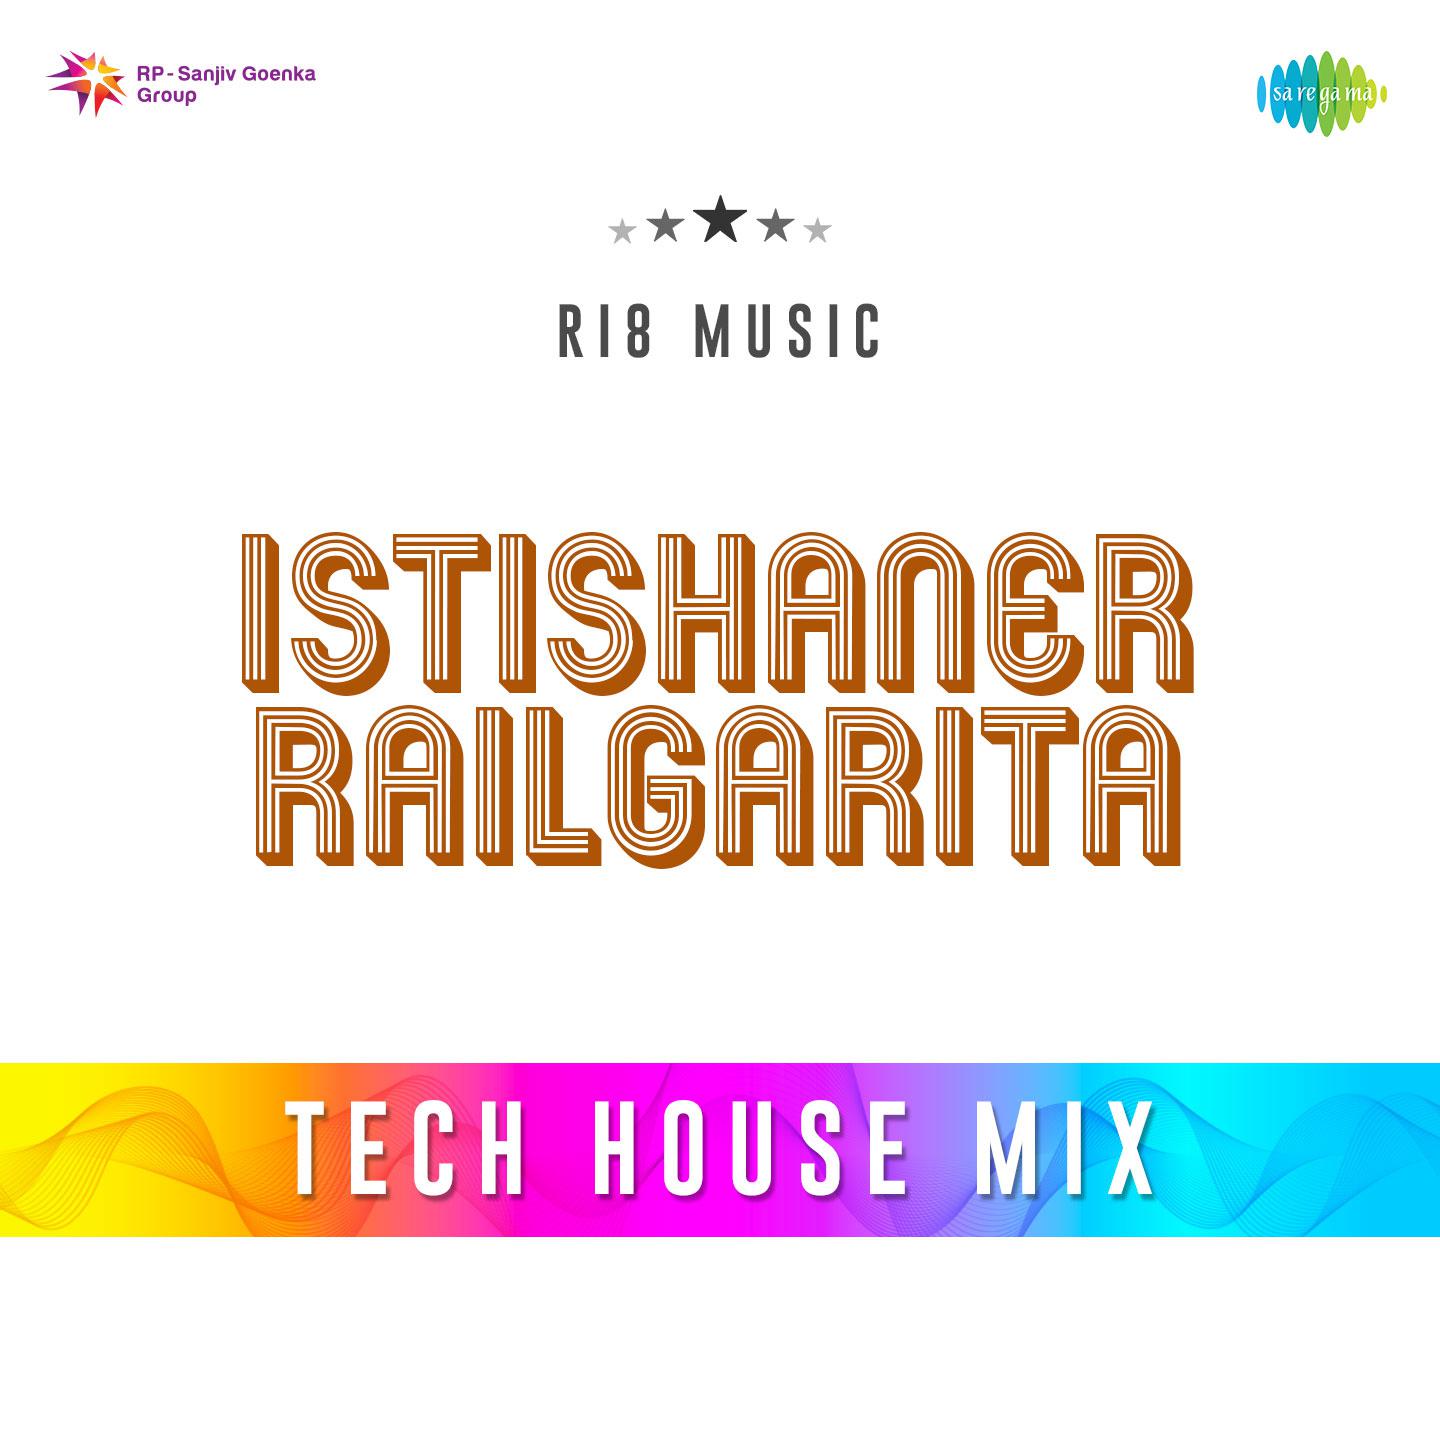 Runa Laila - Istishaner Railgarita - Tech House Mix